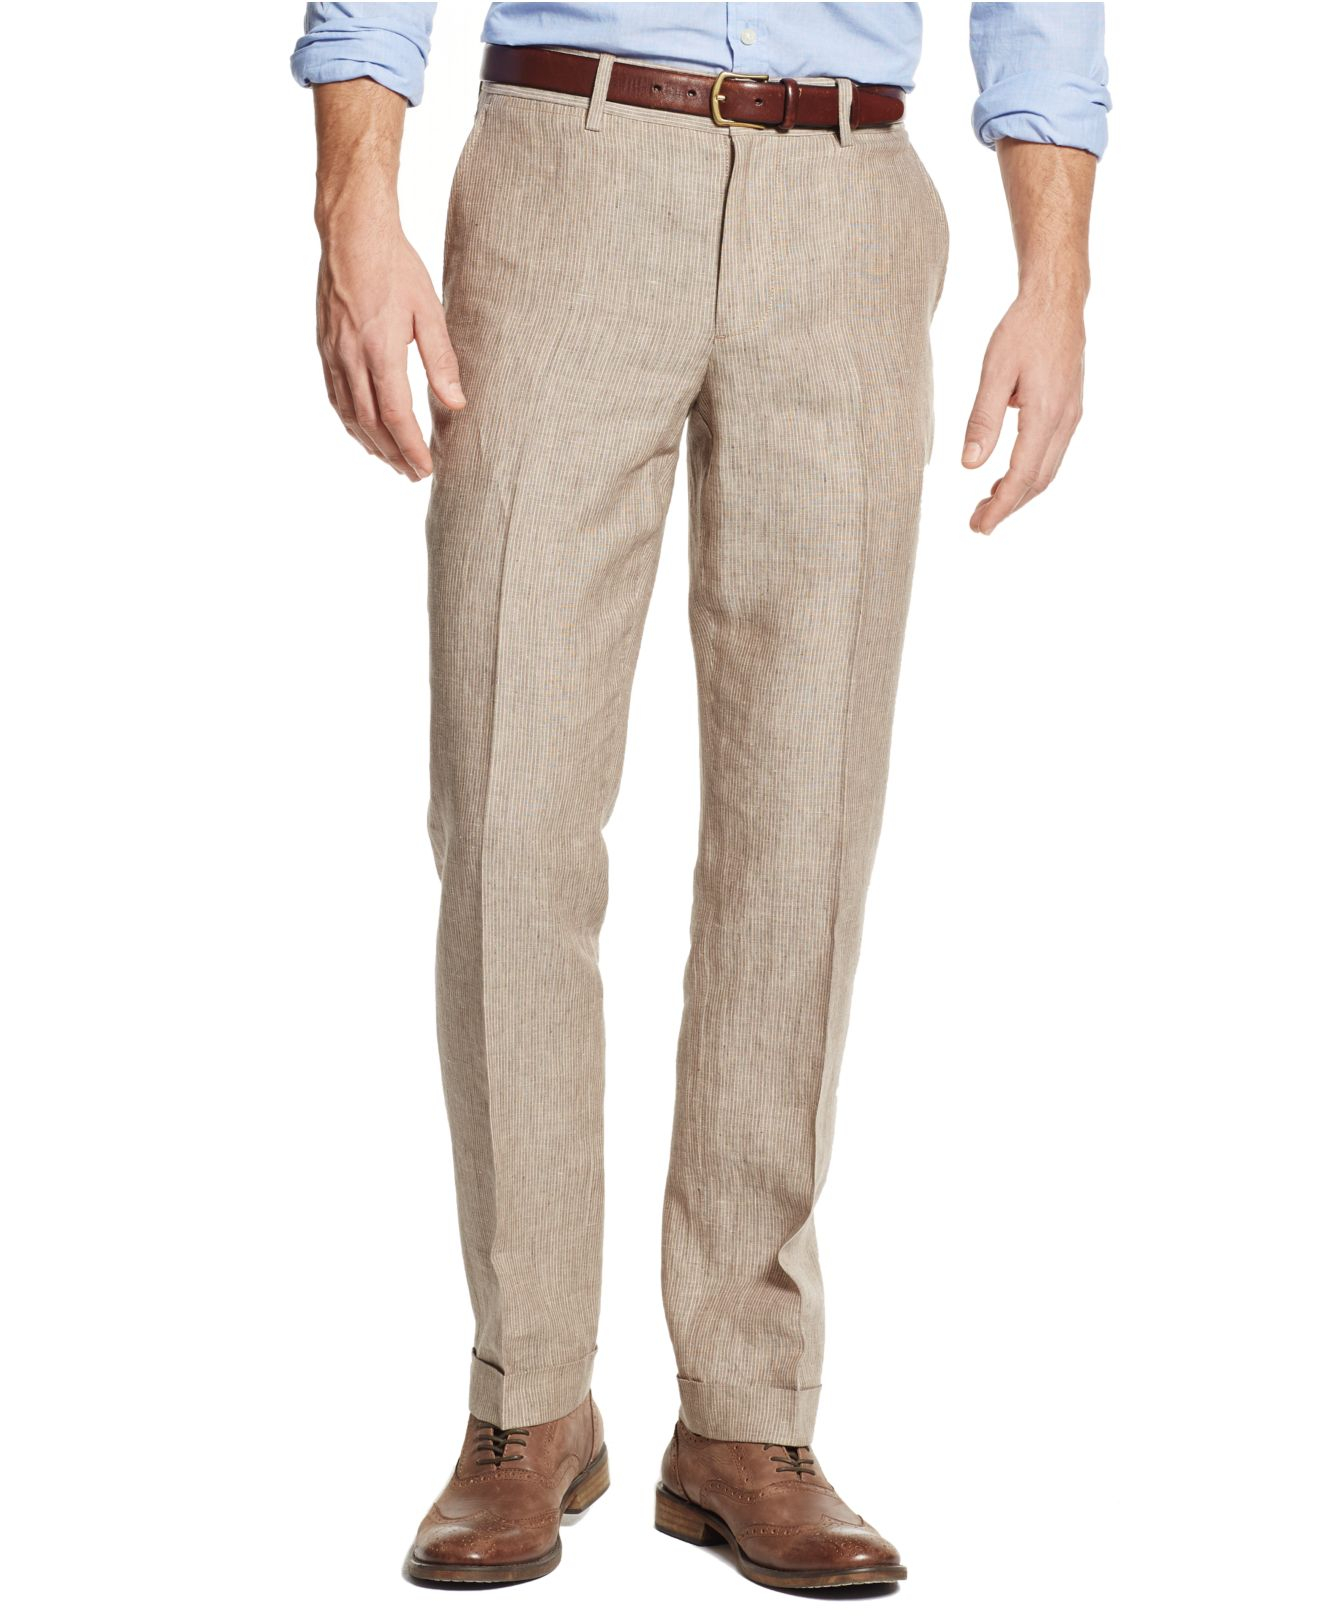 Lyst - Tommy Hilfiger Winslow Striped Linen Pants in Brown for Men